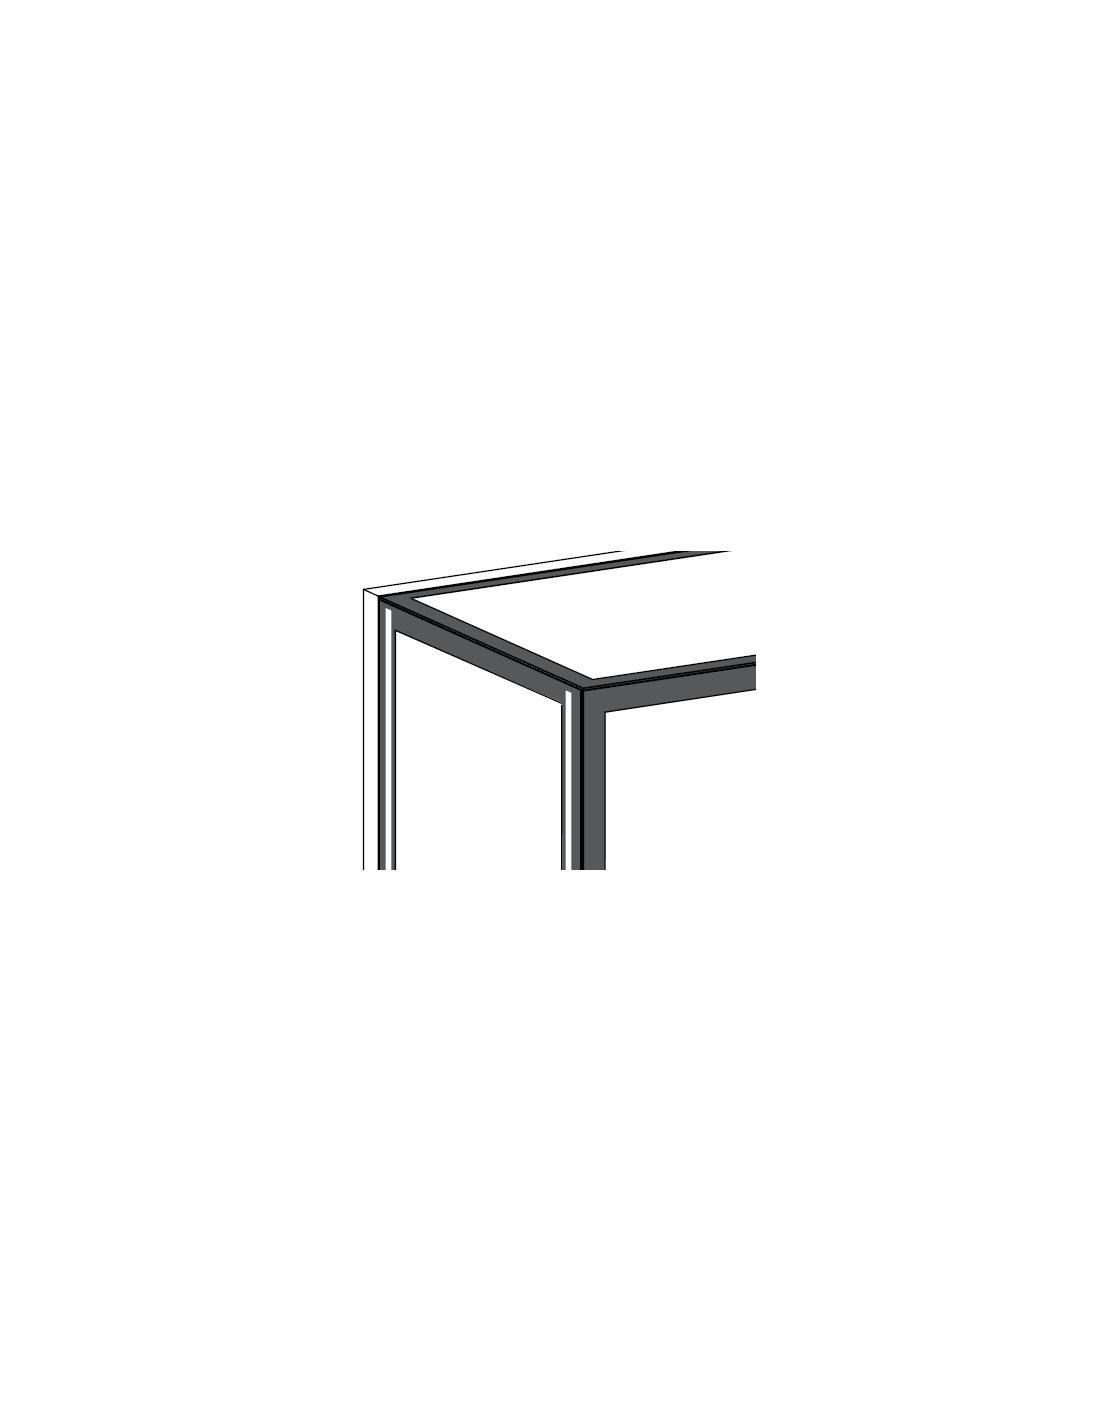 Vidrio lateral único calentado - Modelo KARINA